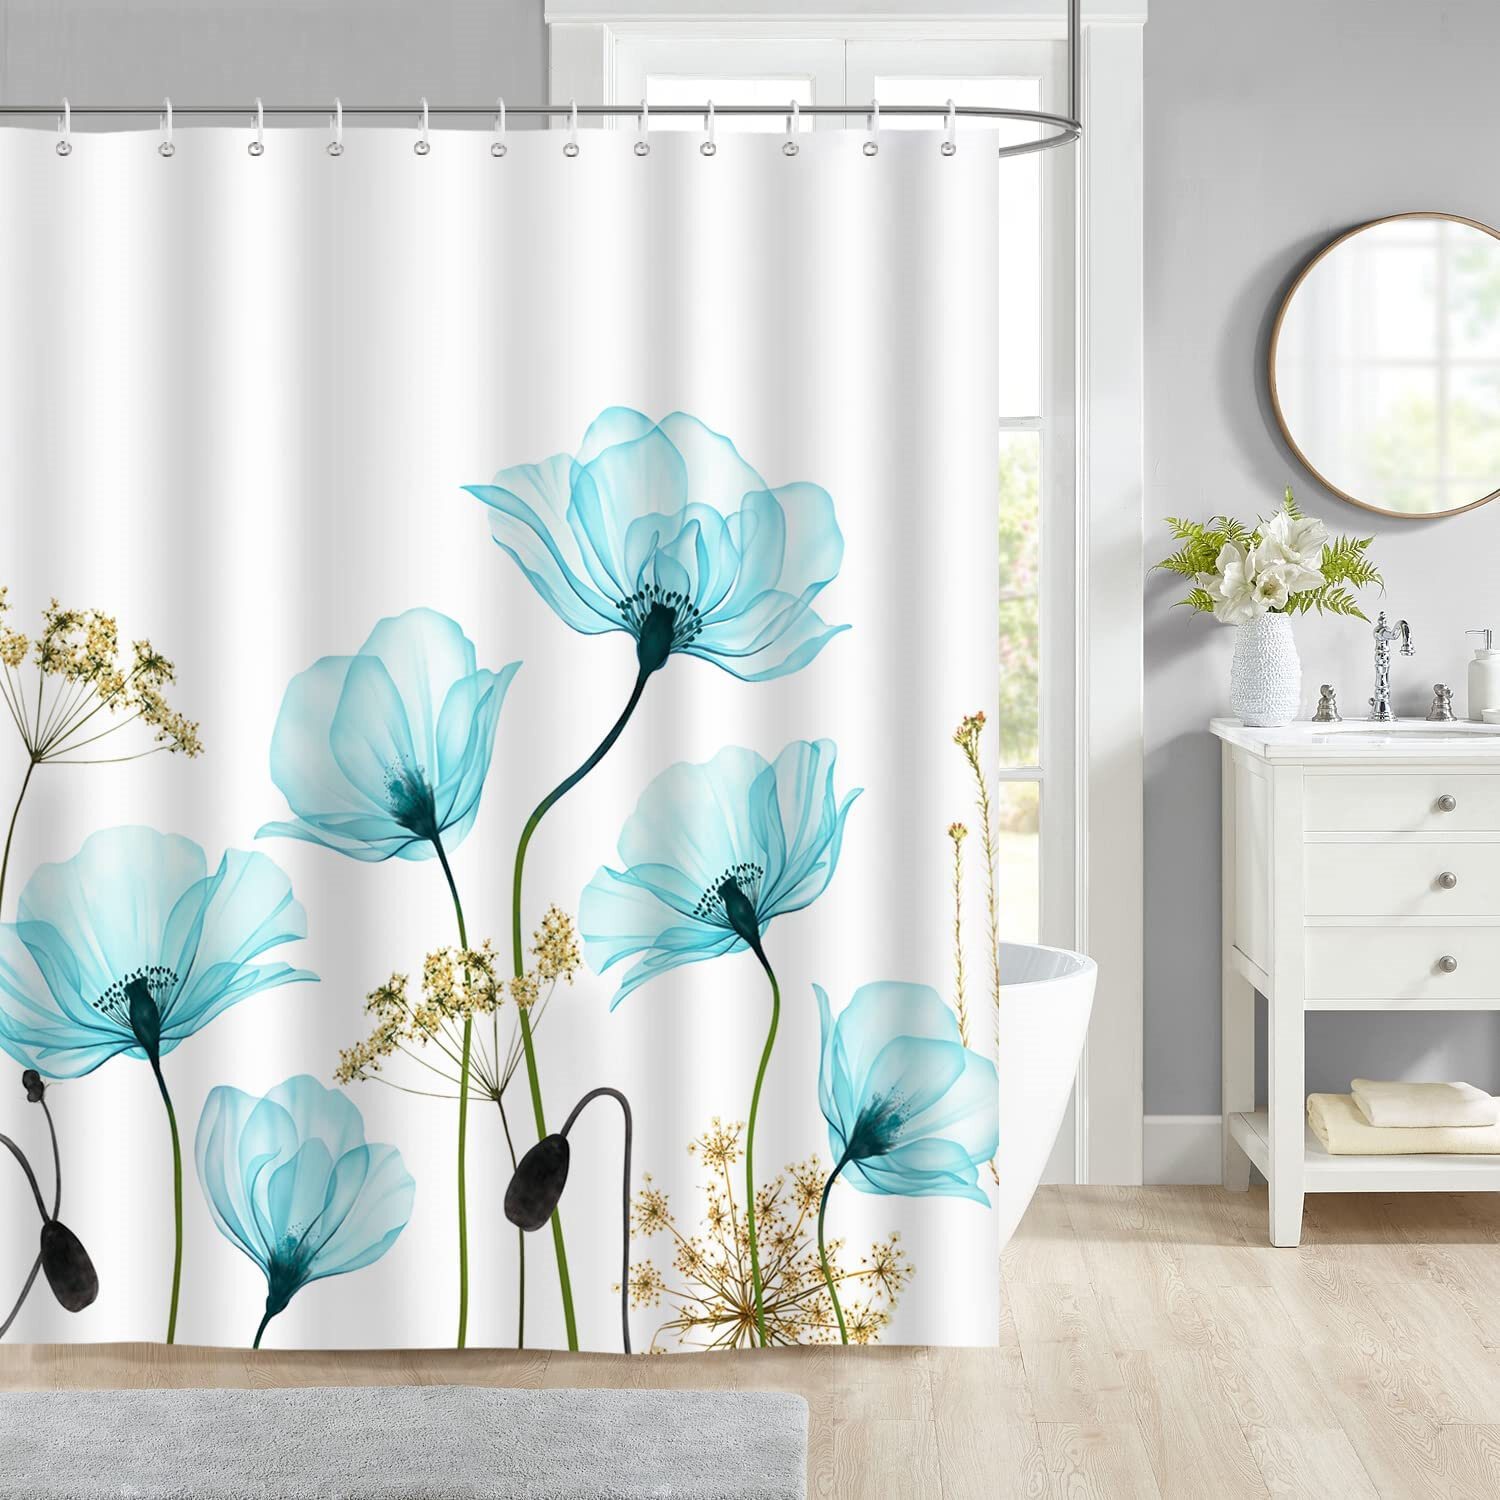 72x72" Floral Blue Shaggy Flowers Bathroom Fabric Shower Curtain Set With Hooks 